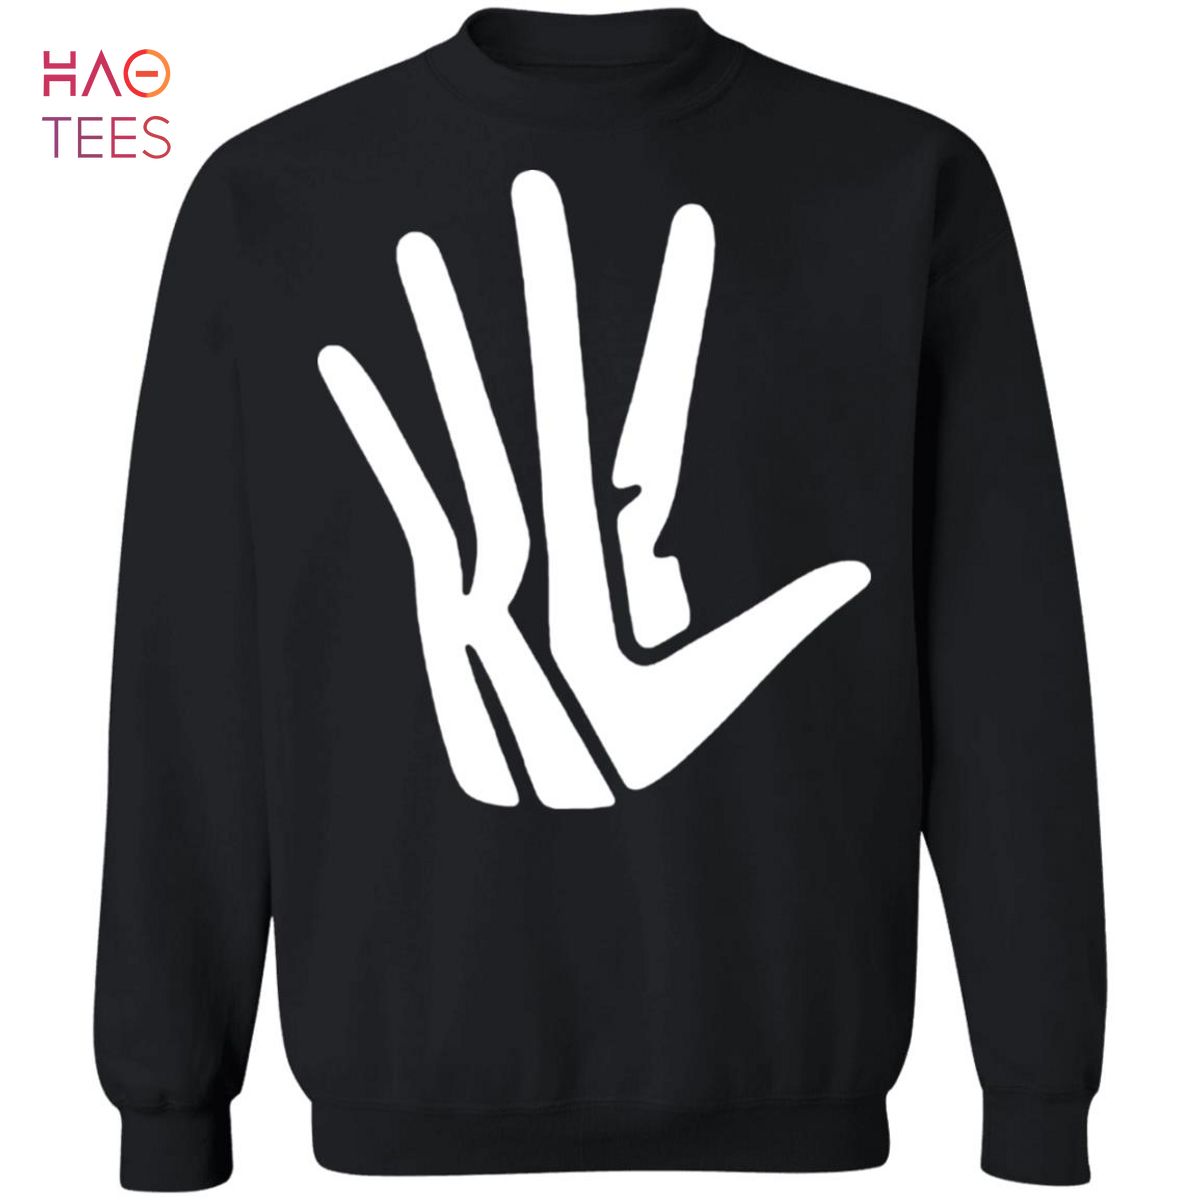 [NEW] Kl2 Sweater